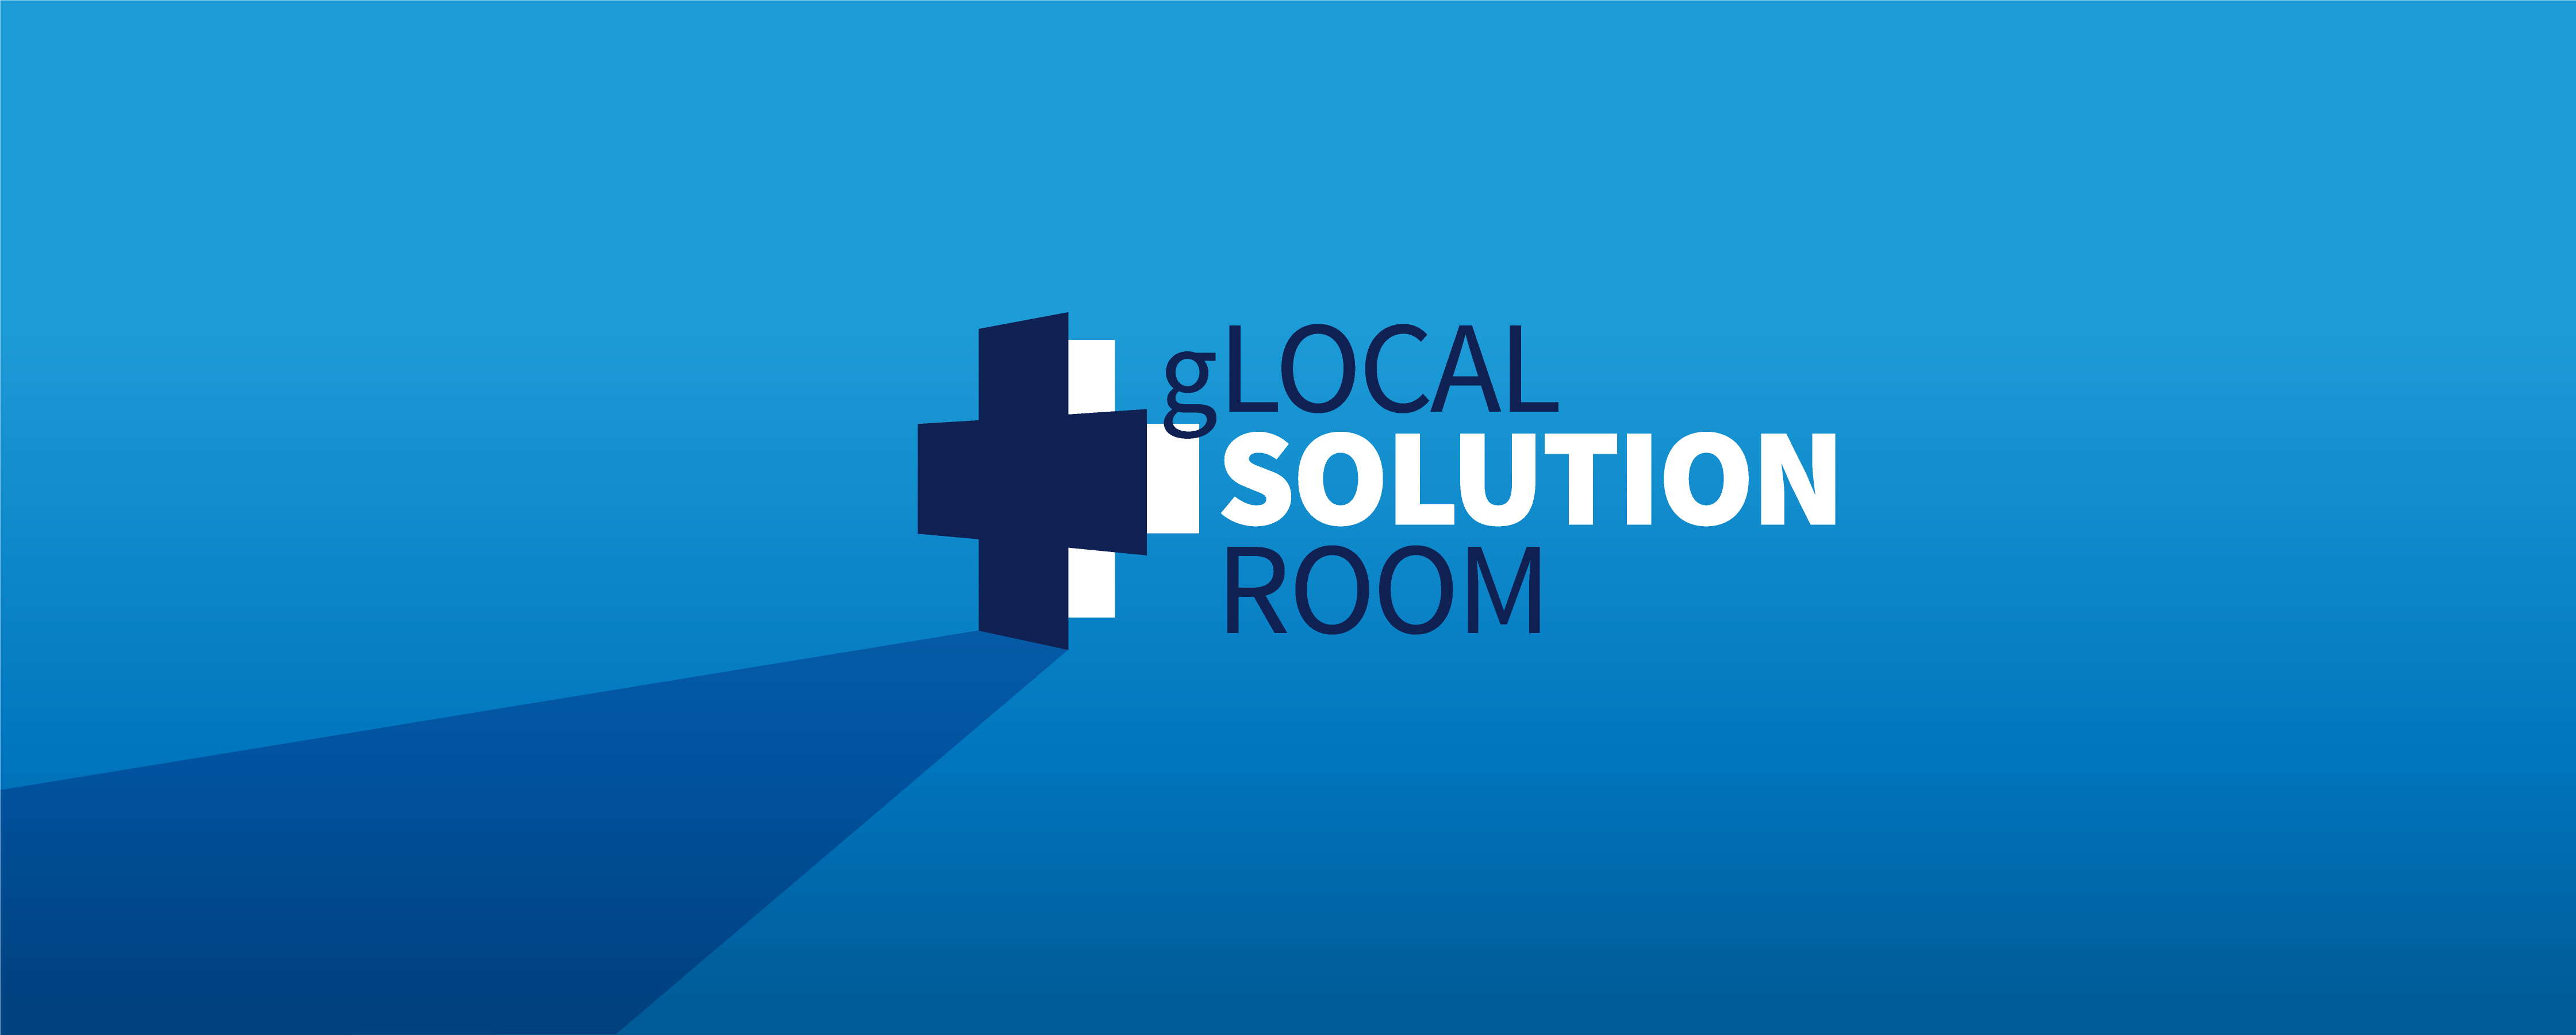 JBI gLocal Solution Room graphic